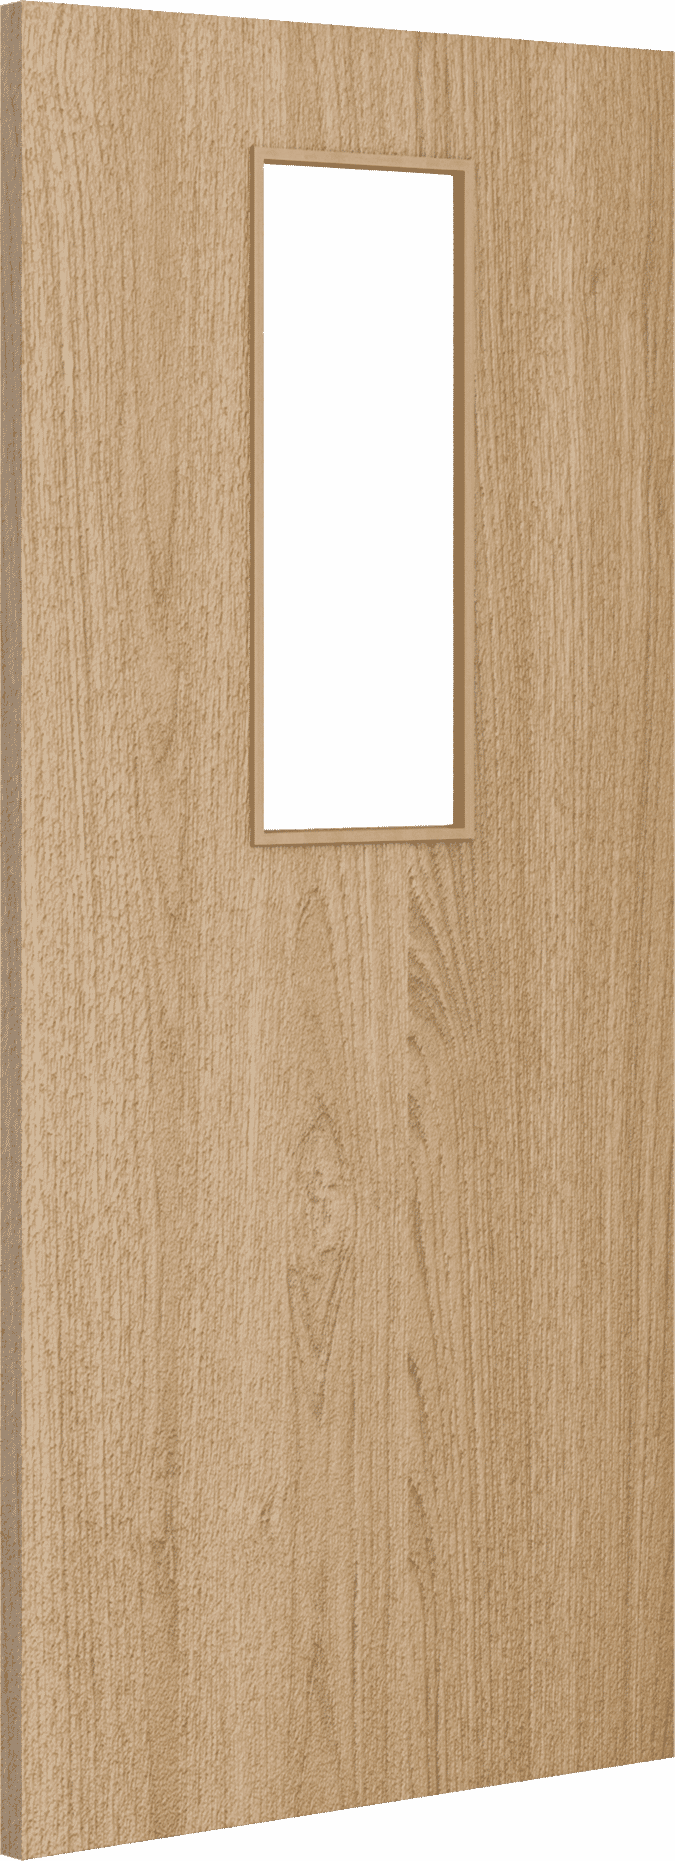 2032mm x 813mm x 44mm (32") Architectural Oak 14 Frosted Glazed - Prefinished FD30 Fire Door Blank